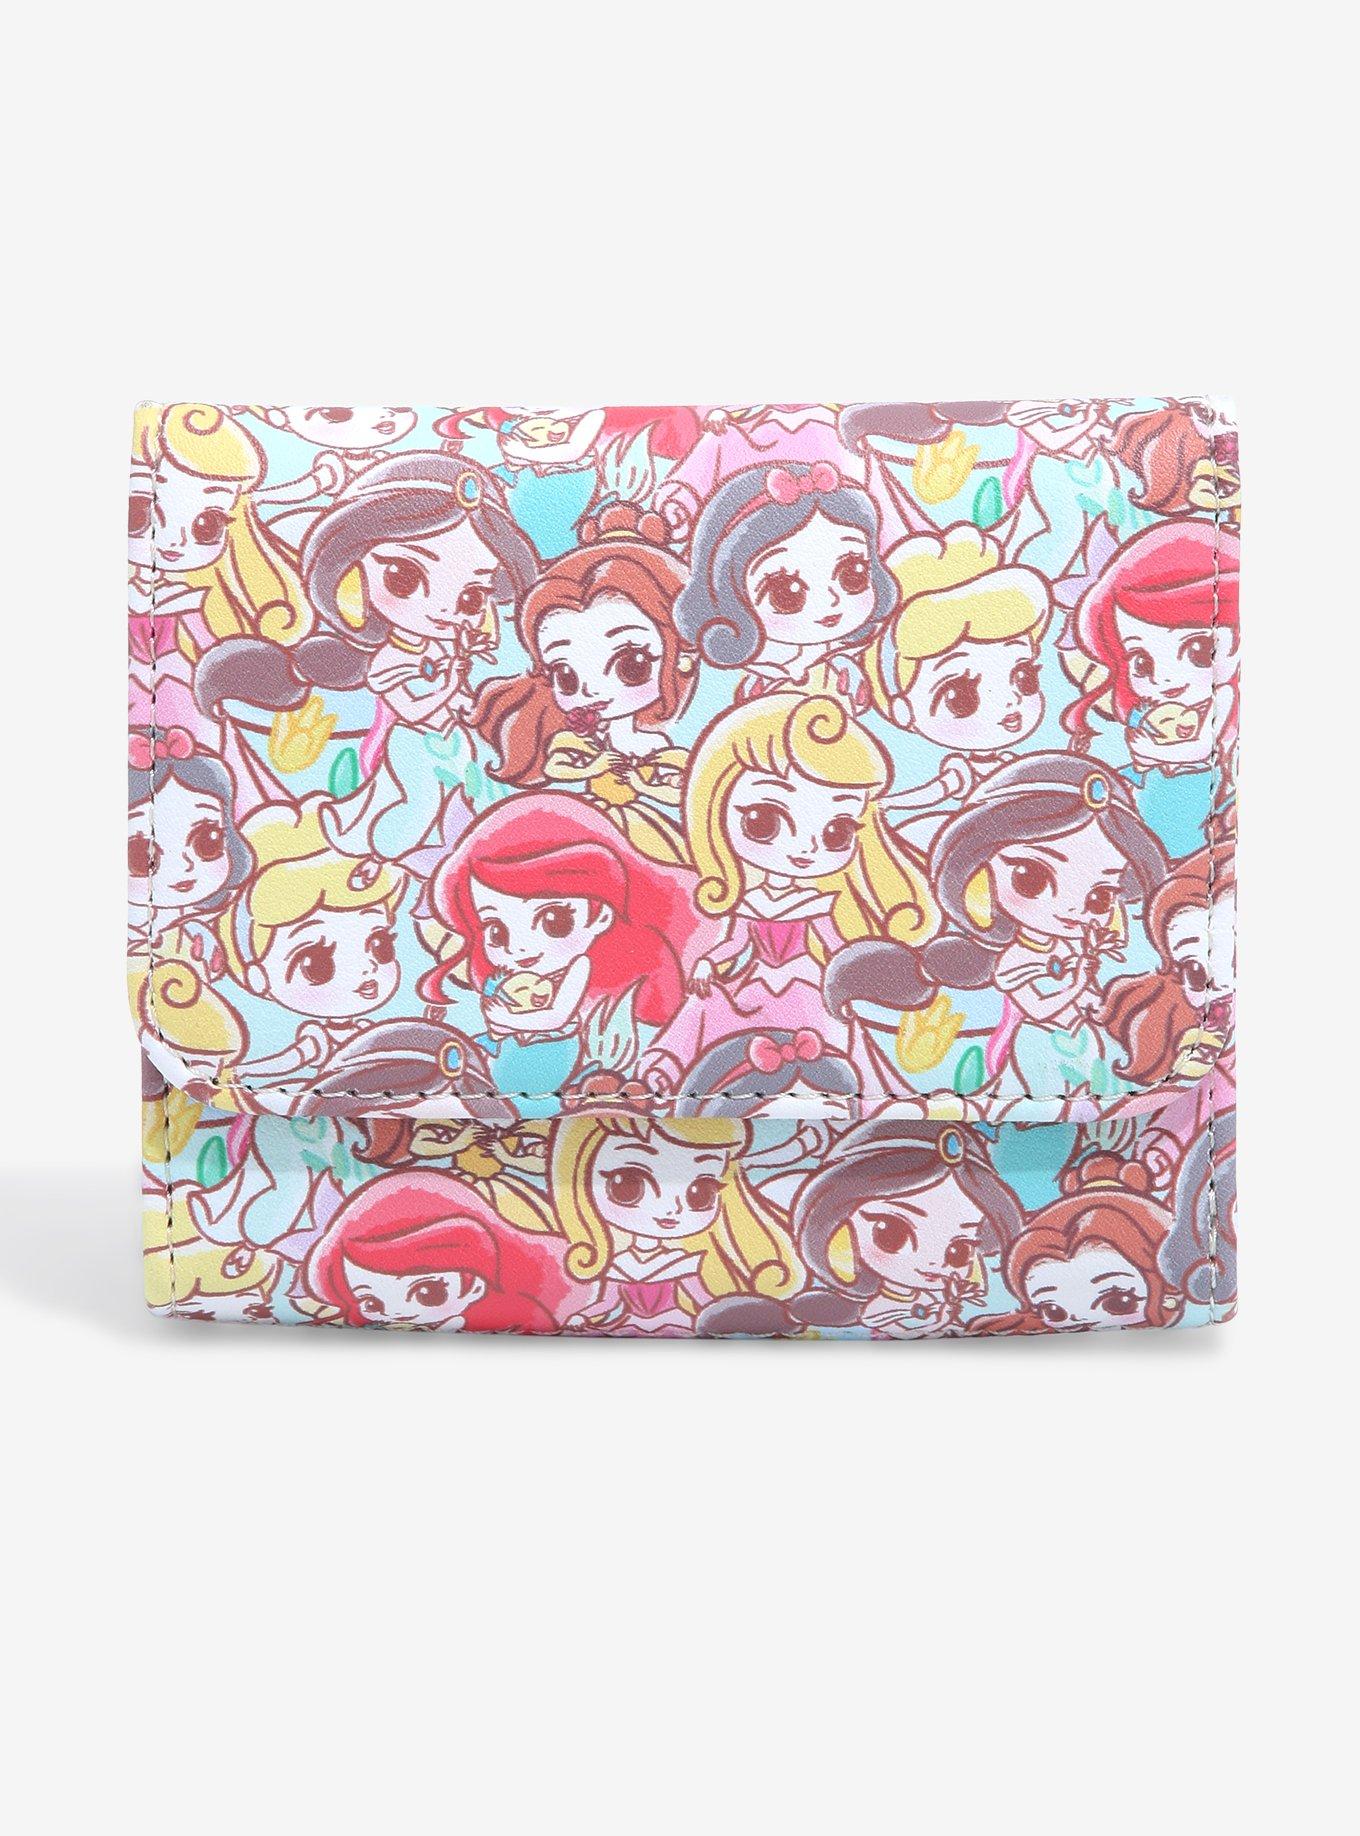 Loungefly Disney Chibi Princess Mini Flap Wallet, , hi-res